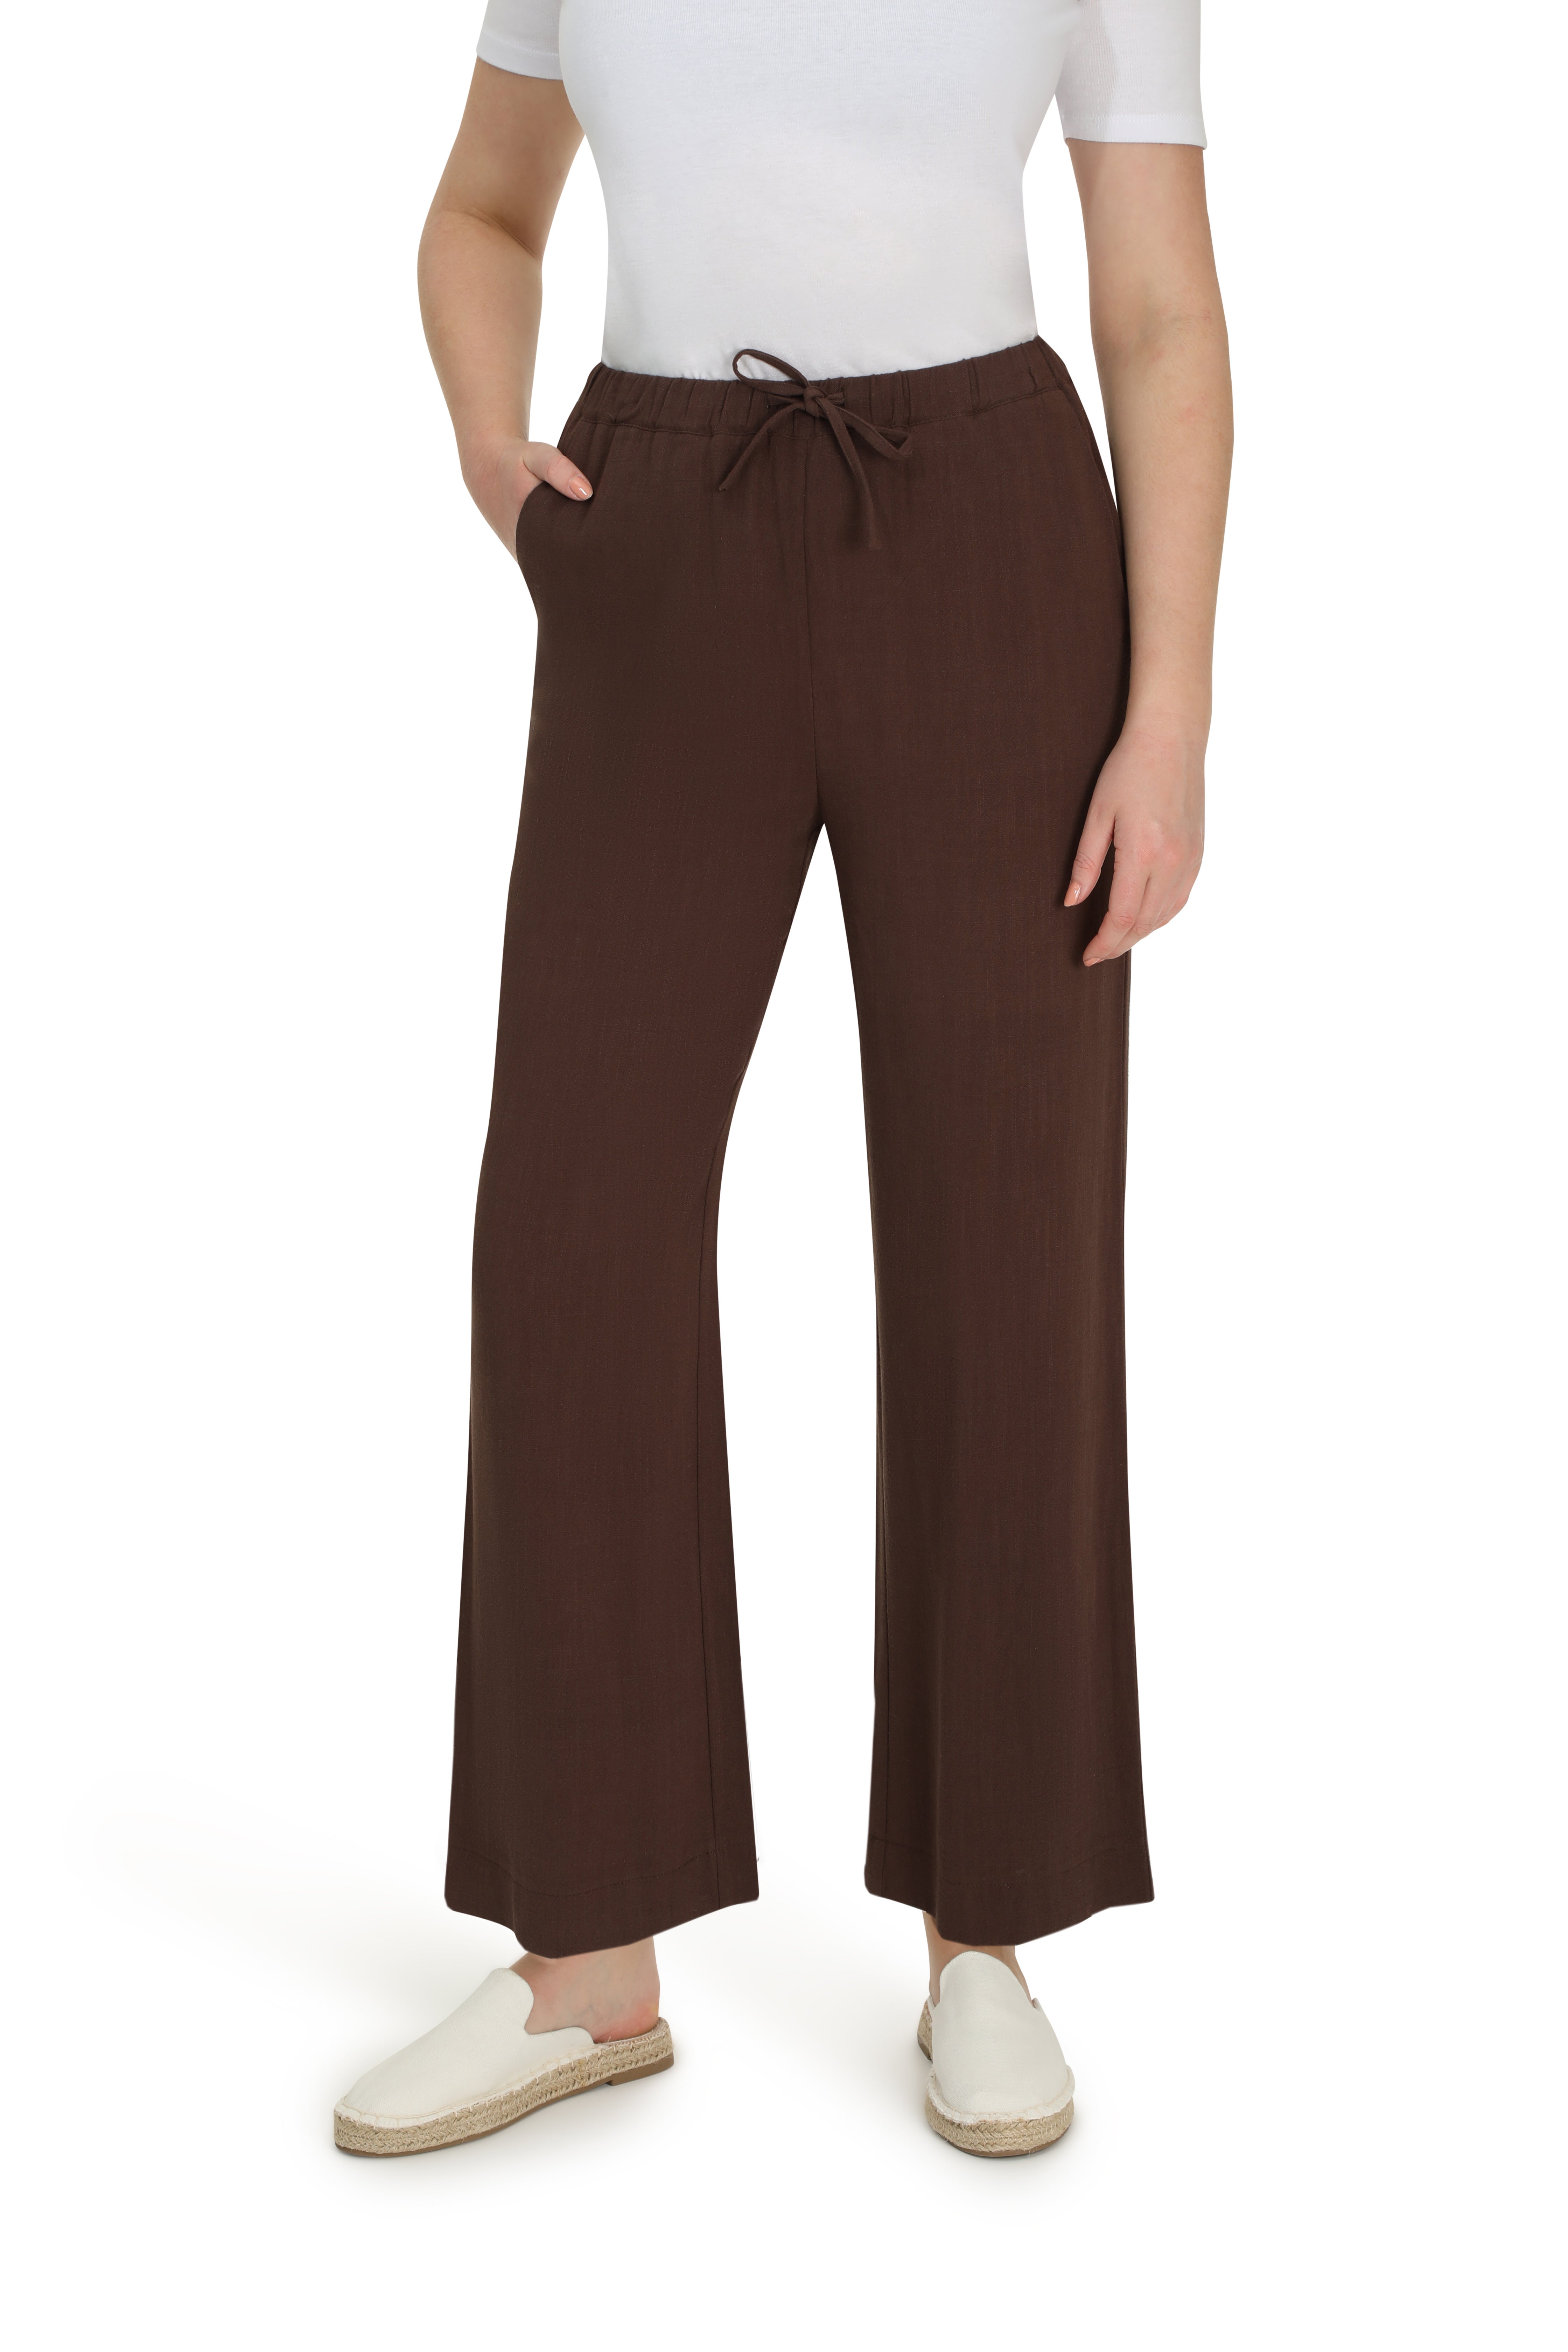 Viscose stretch legging, brown, Pants Women's